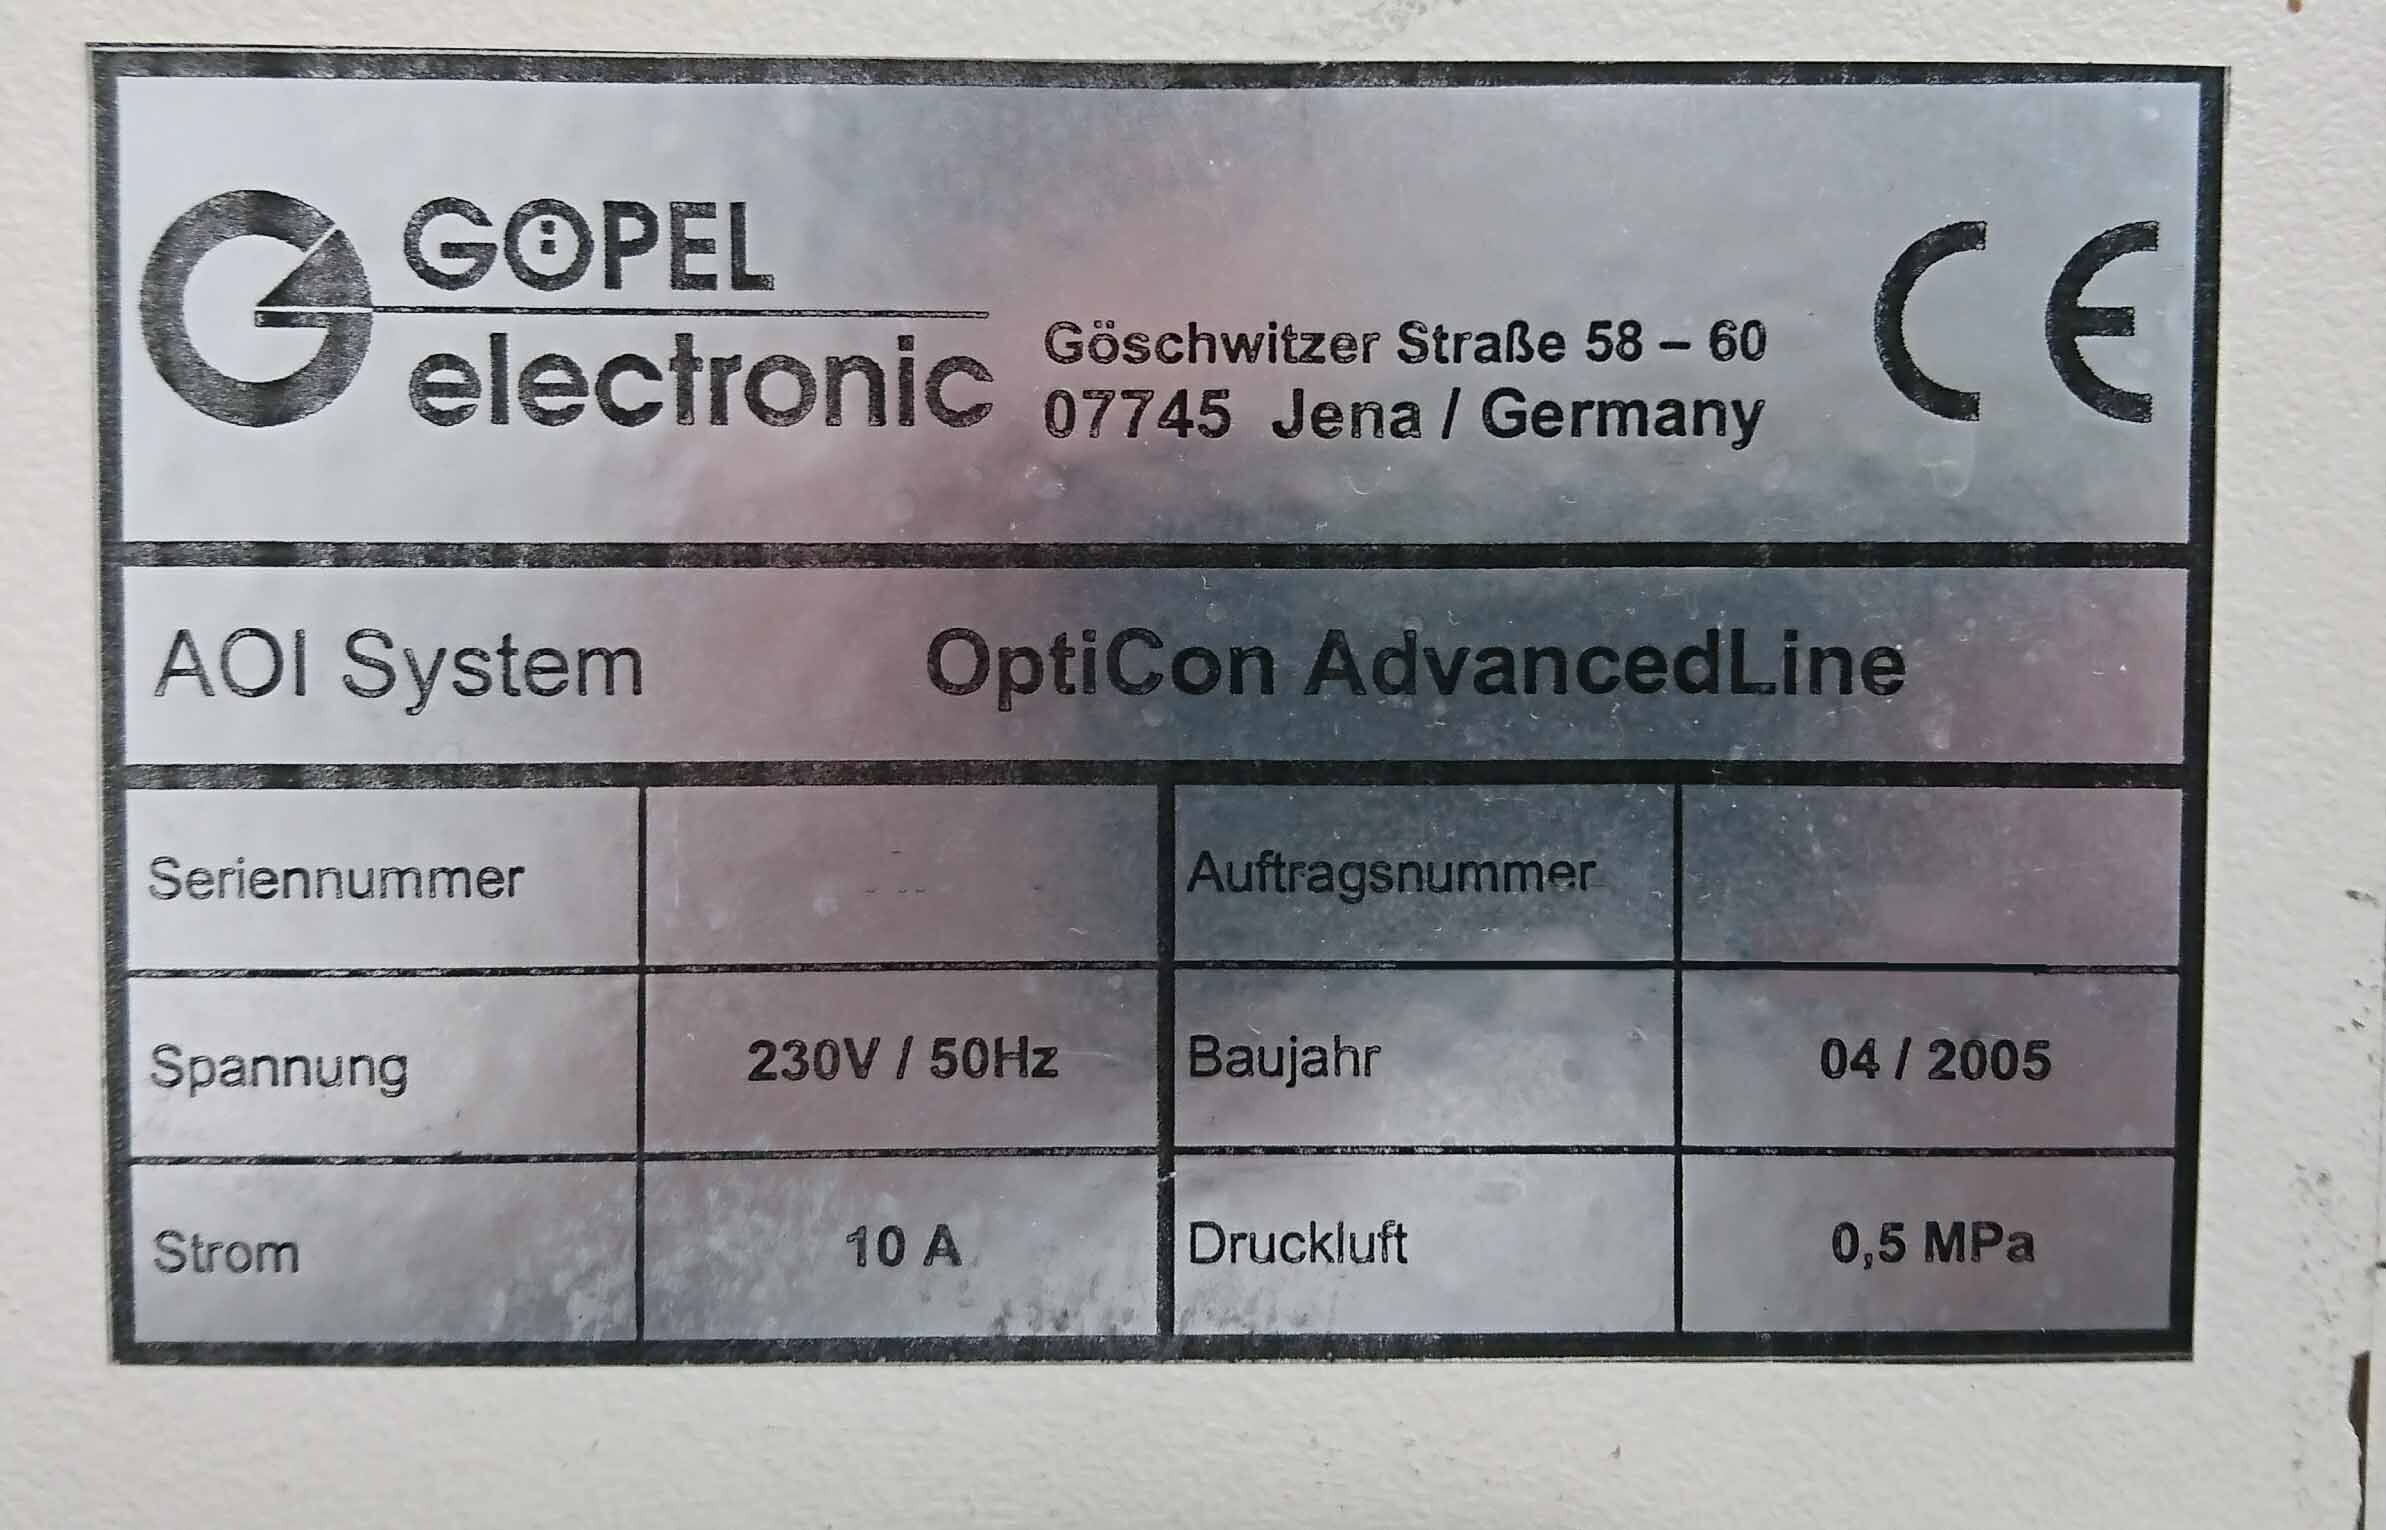 圖為 已使用的 GOEPEL OptiCon AdvancedLine 待售